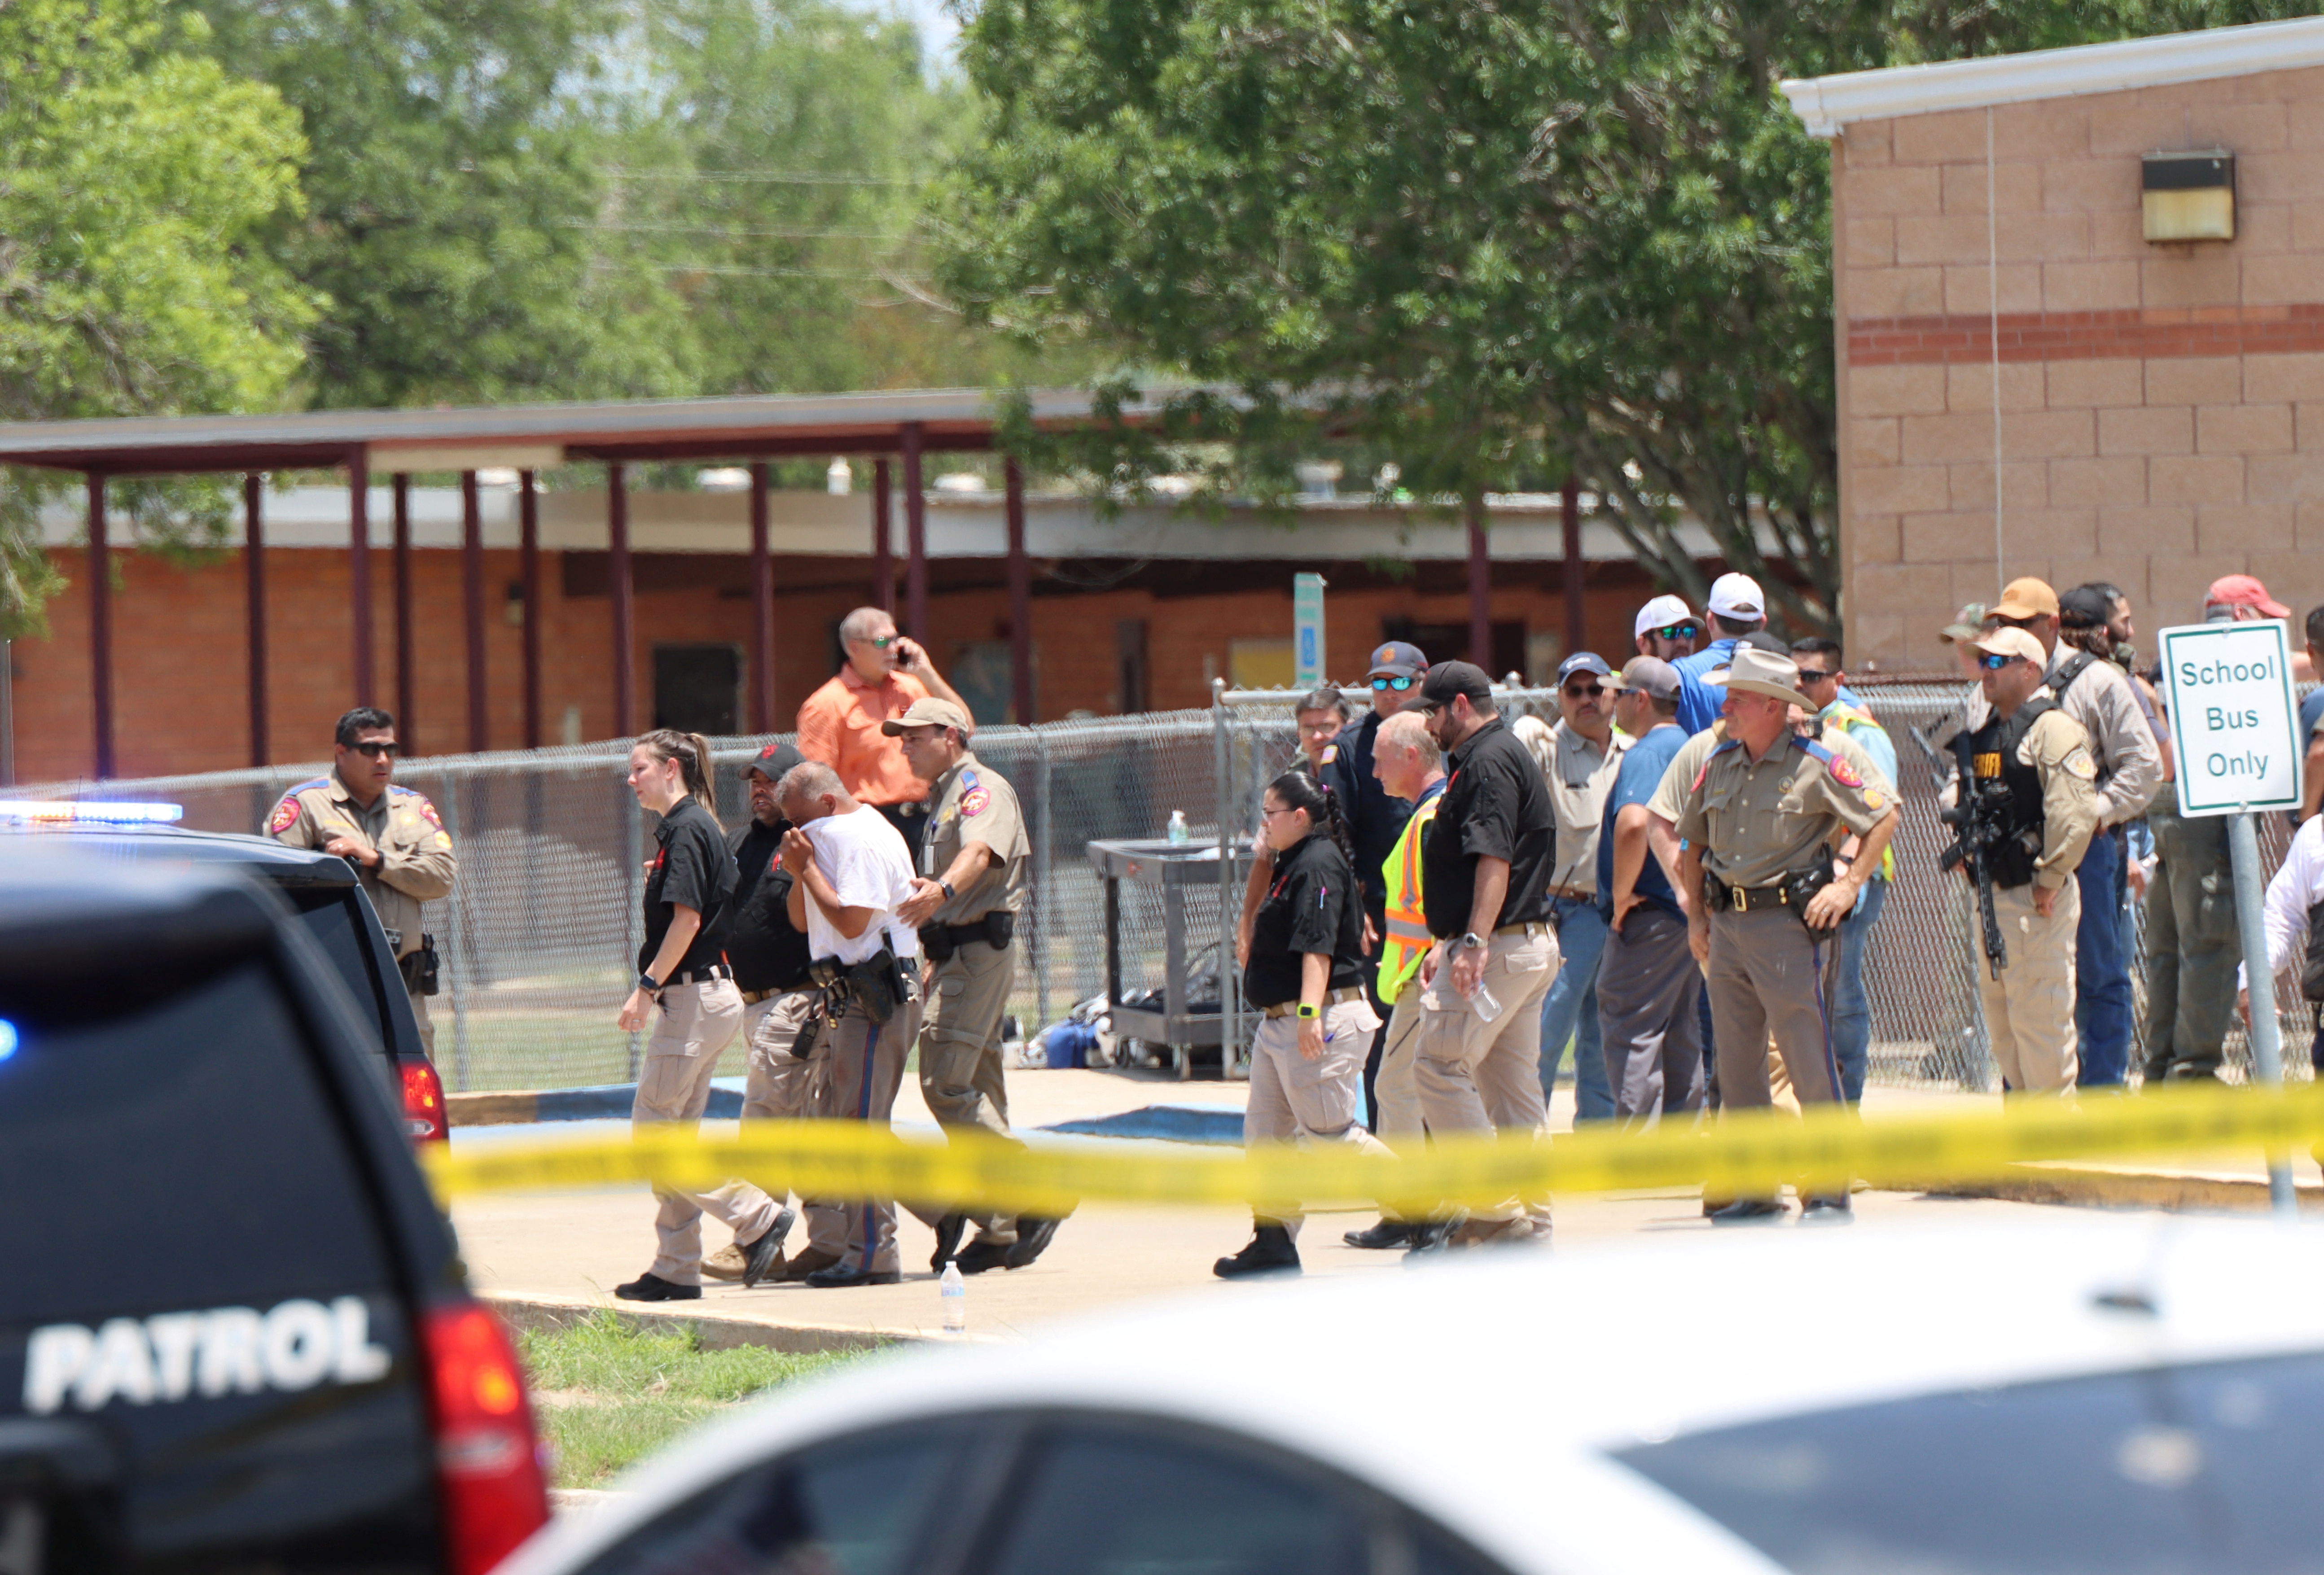 School shooting at Robb Elementary in Uvalde, Texas